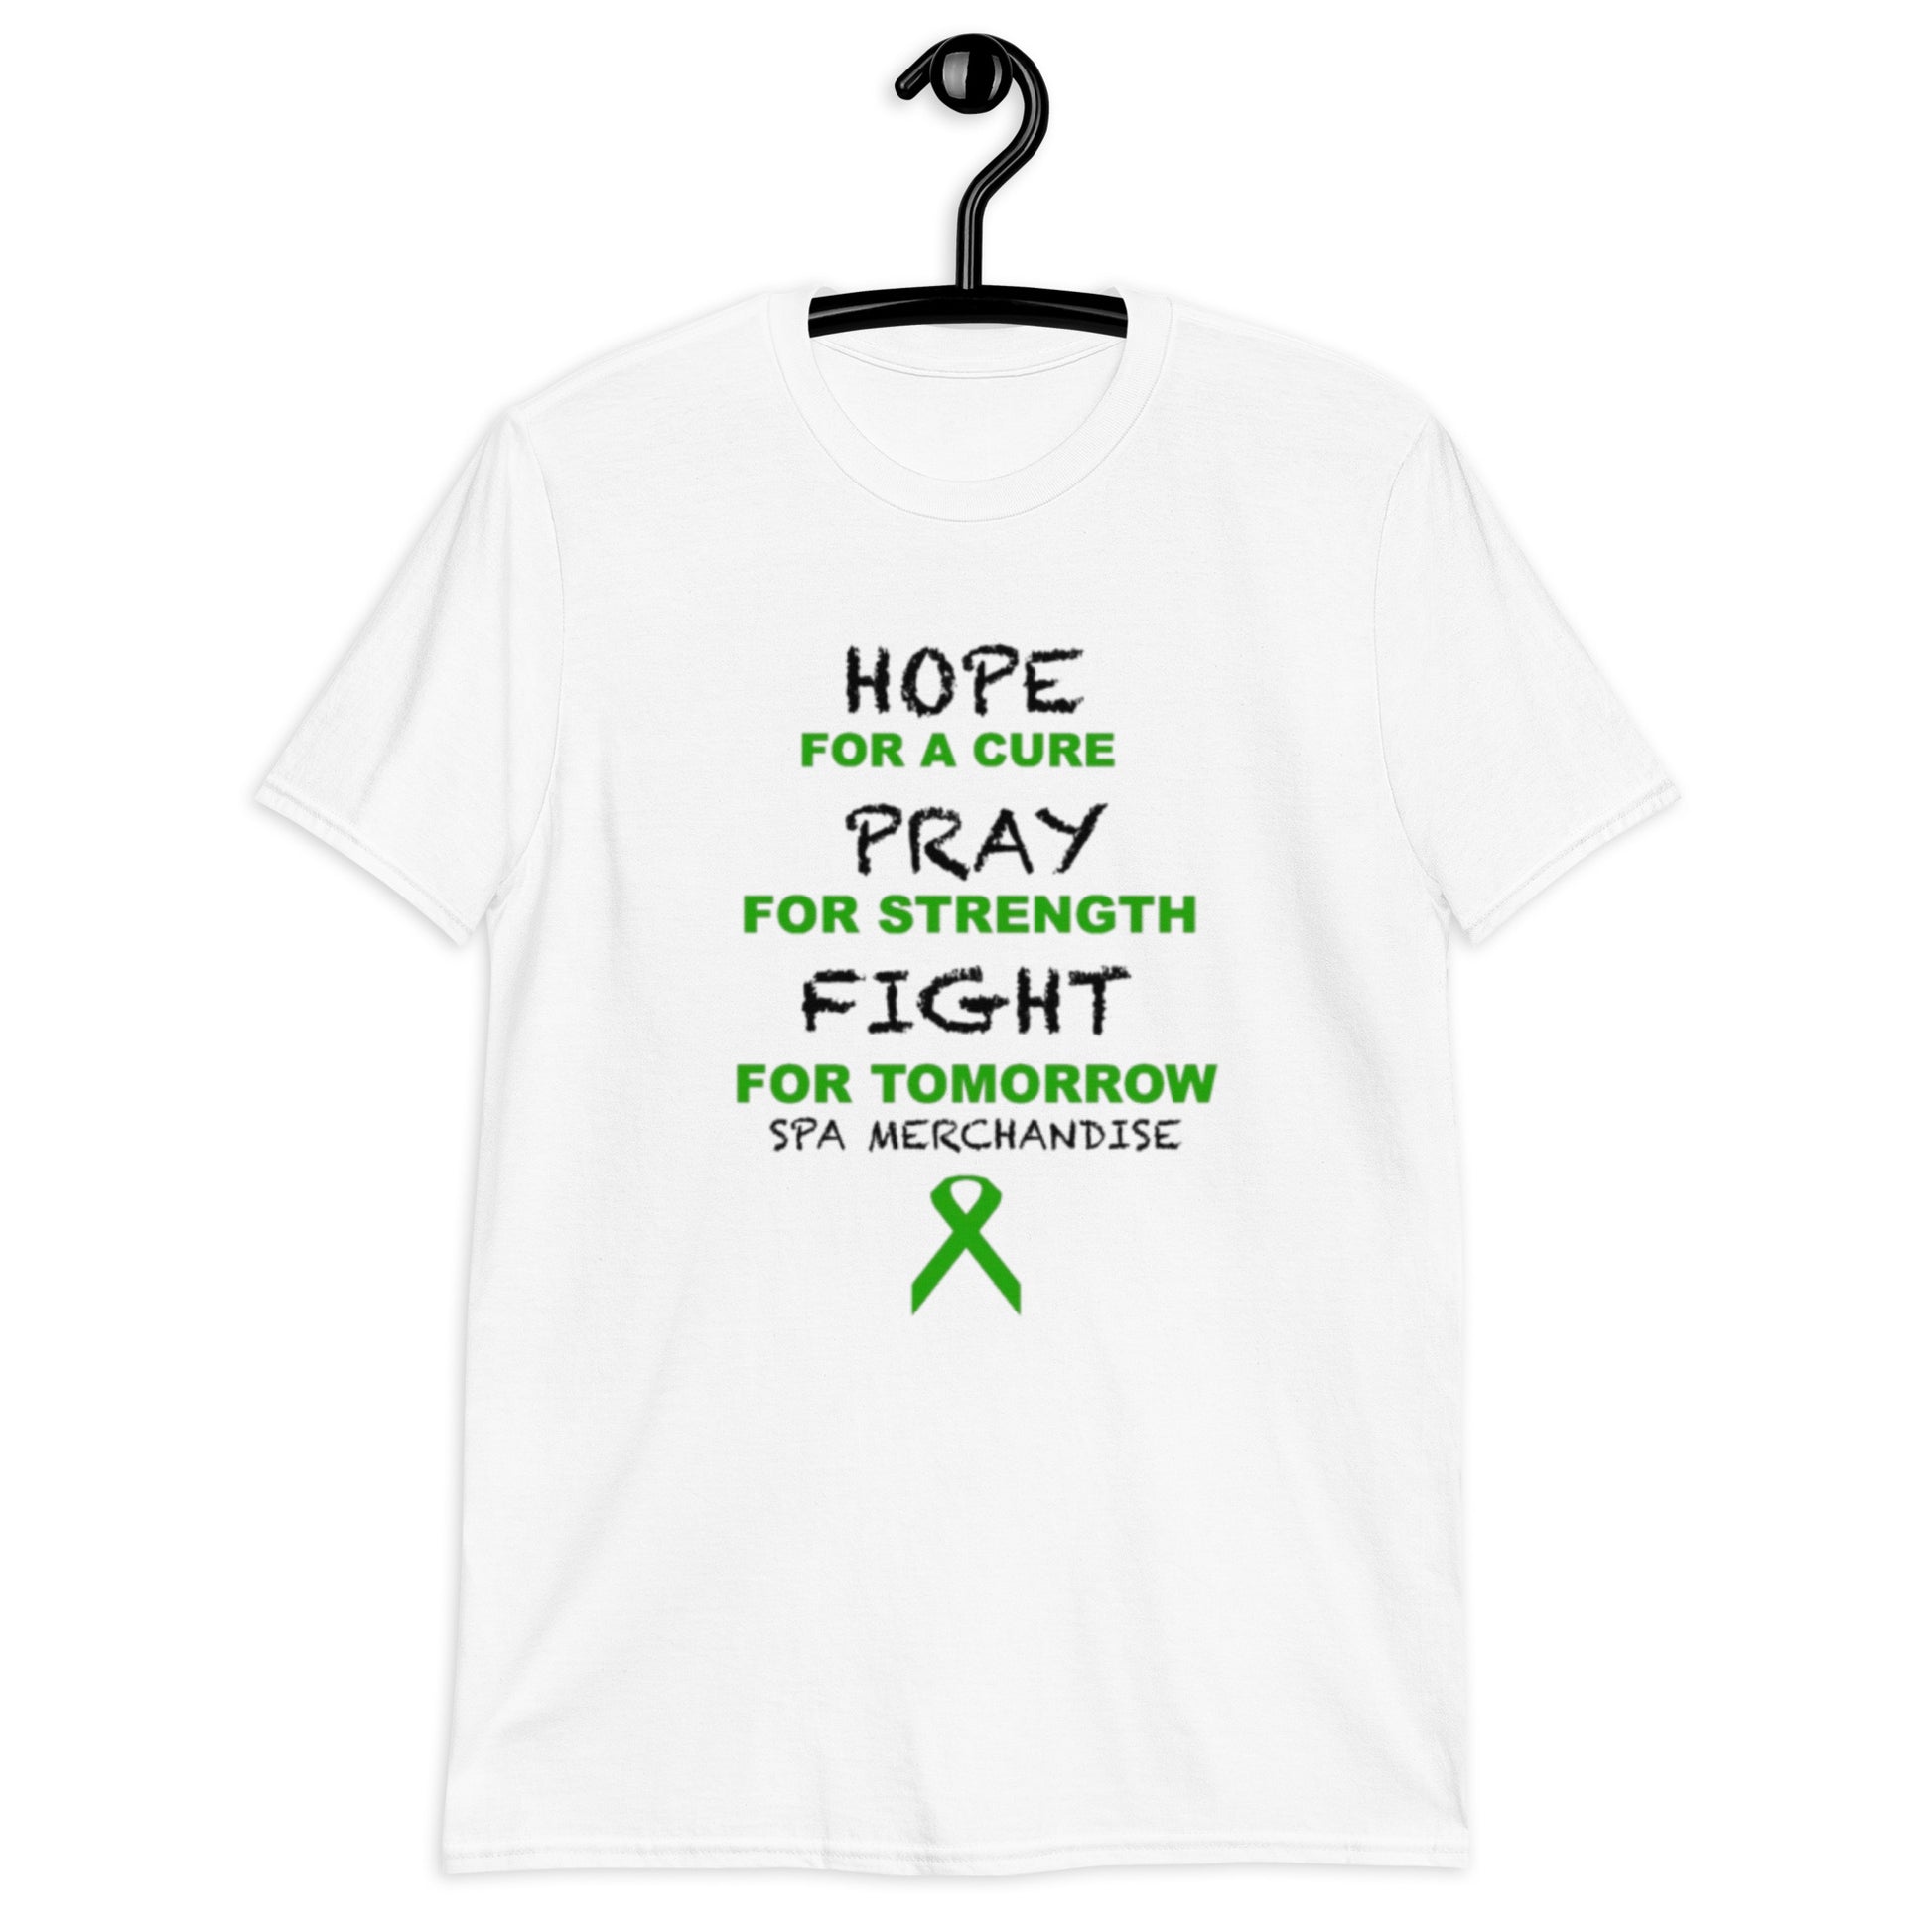 SPA Merchandise - Hope, Pray, Fight T - Shirt - SPA Merchandise 